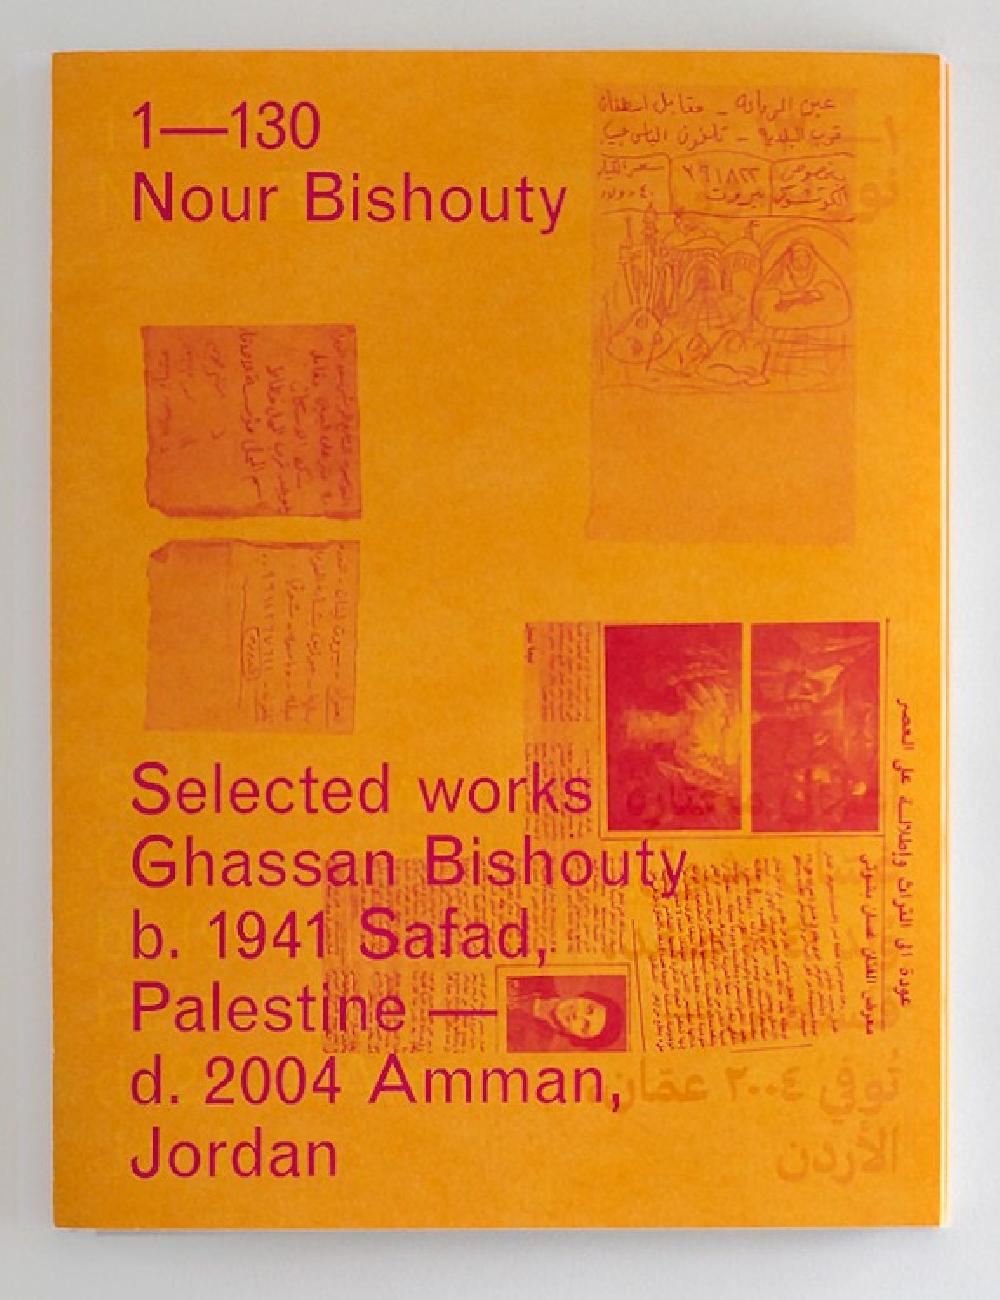 1-130: Selected works Ghassan Bishouty b. 1941 Safad, Palestine - d. 2004 Amman, Jordan